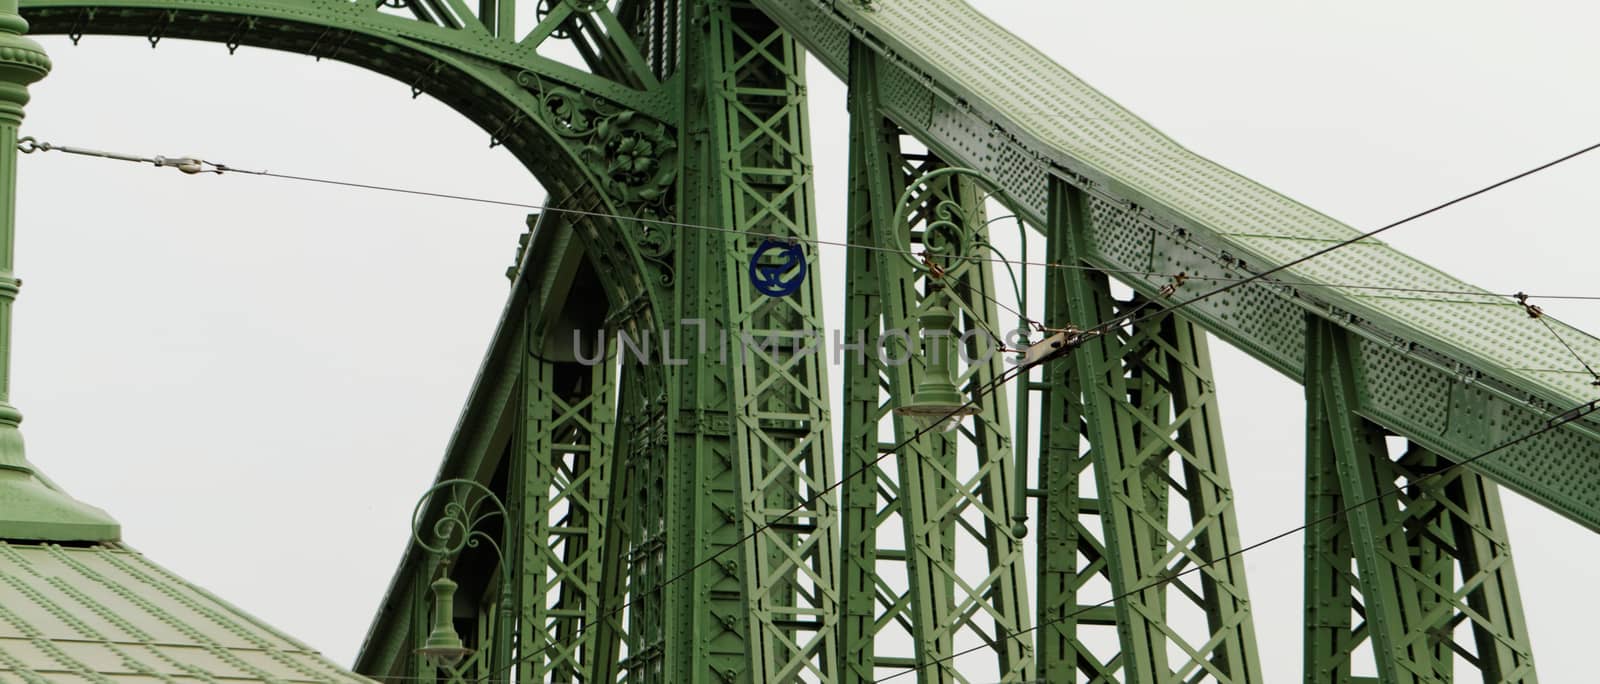 Old welded bridge colored with green - Szechenyi bridge